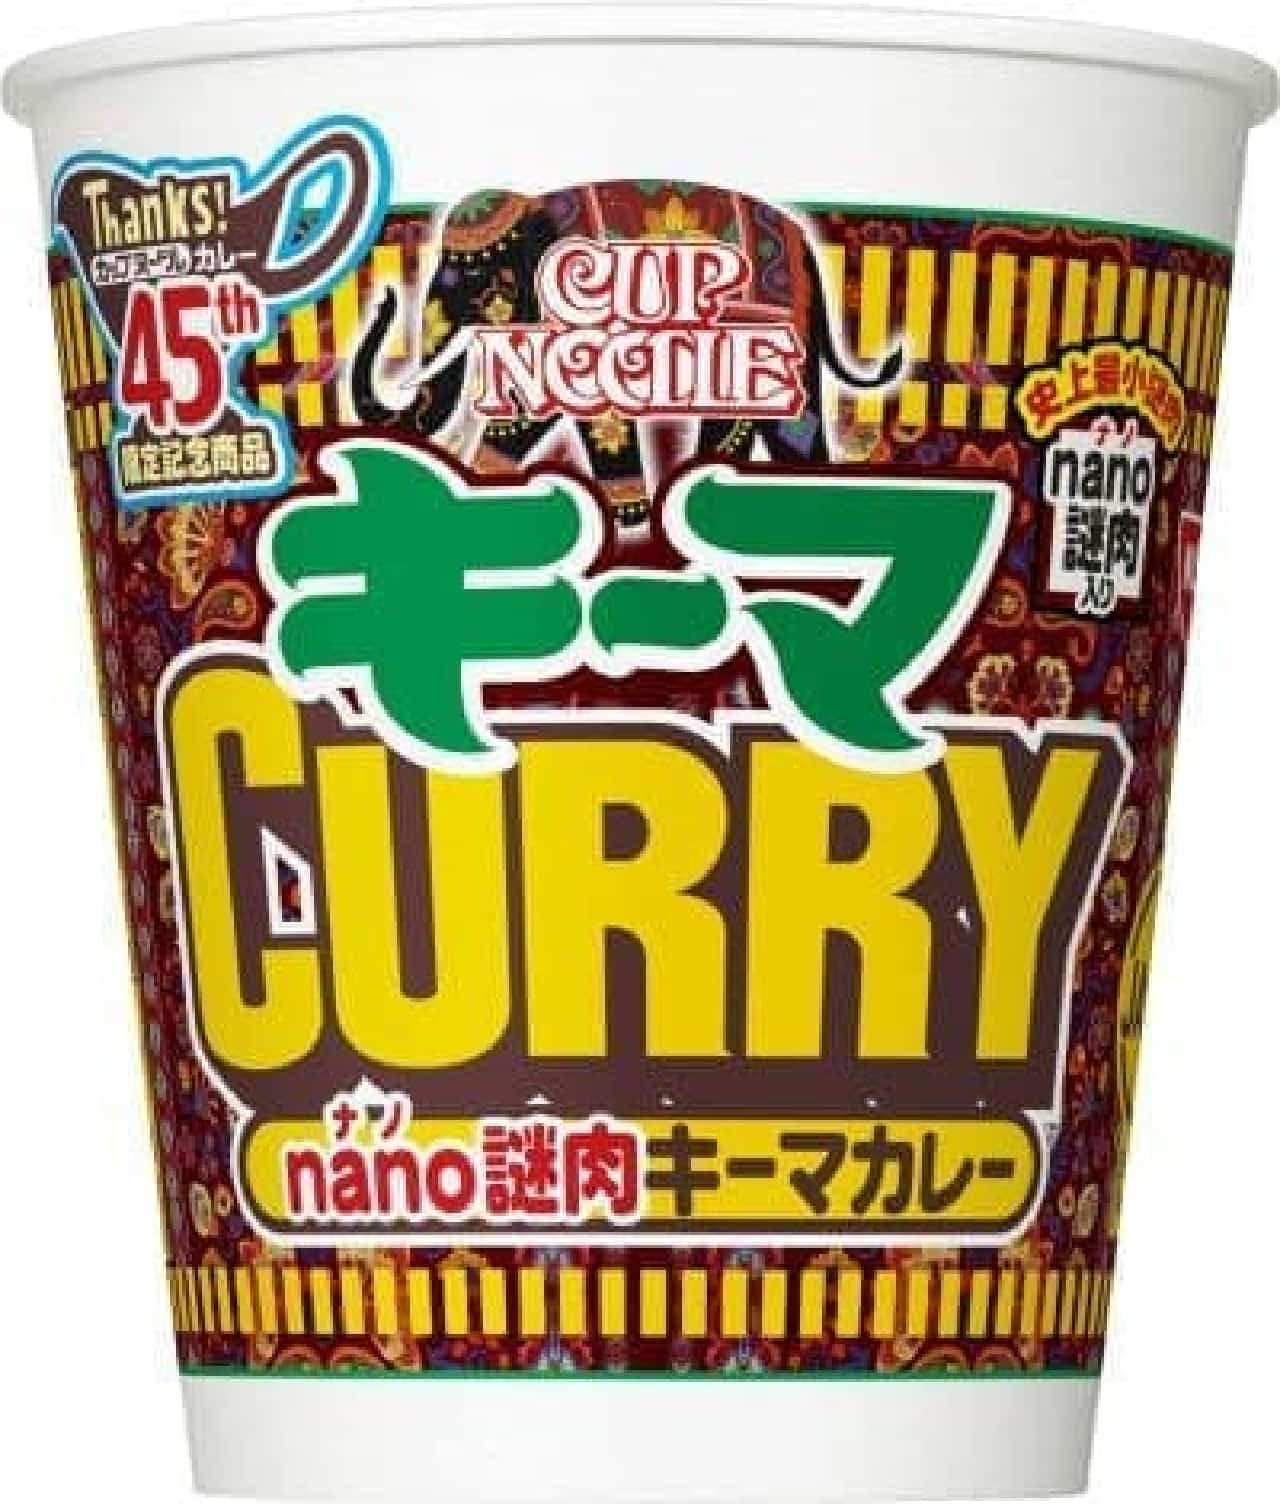 Nissin Foods "Cup Noodle nano (Nano) Mysterious Meat Keema Curry"